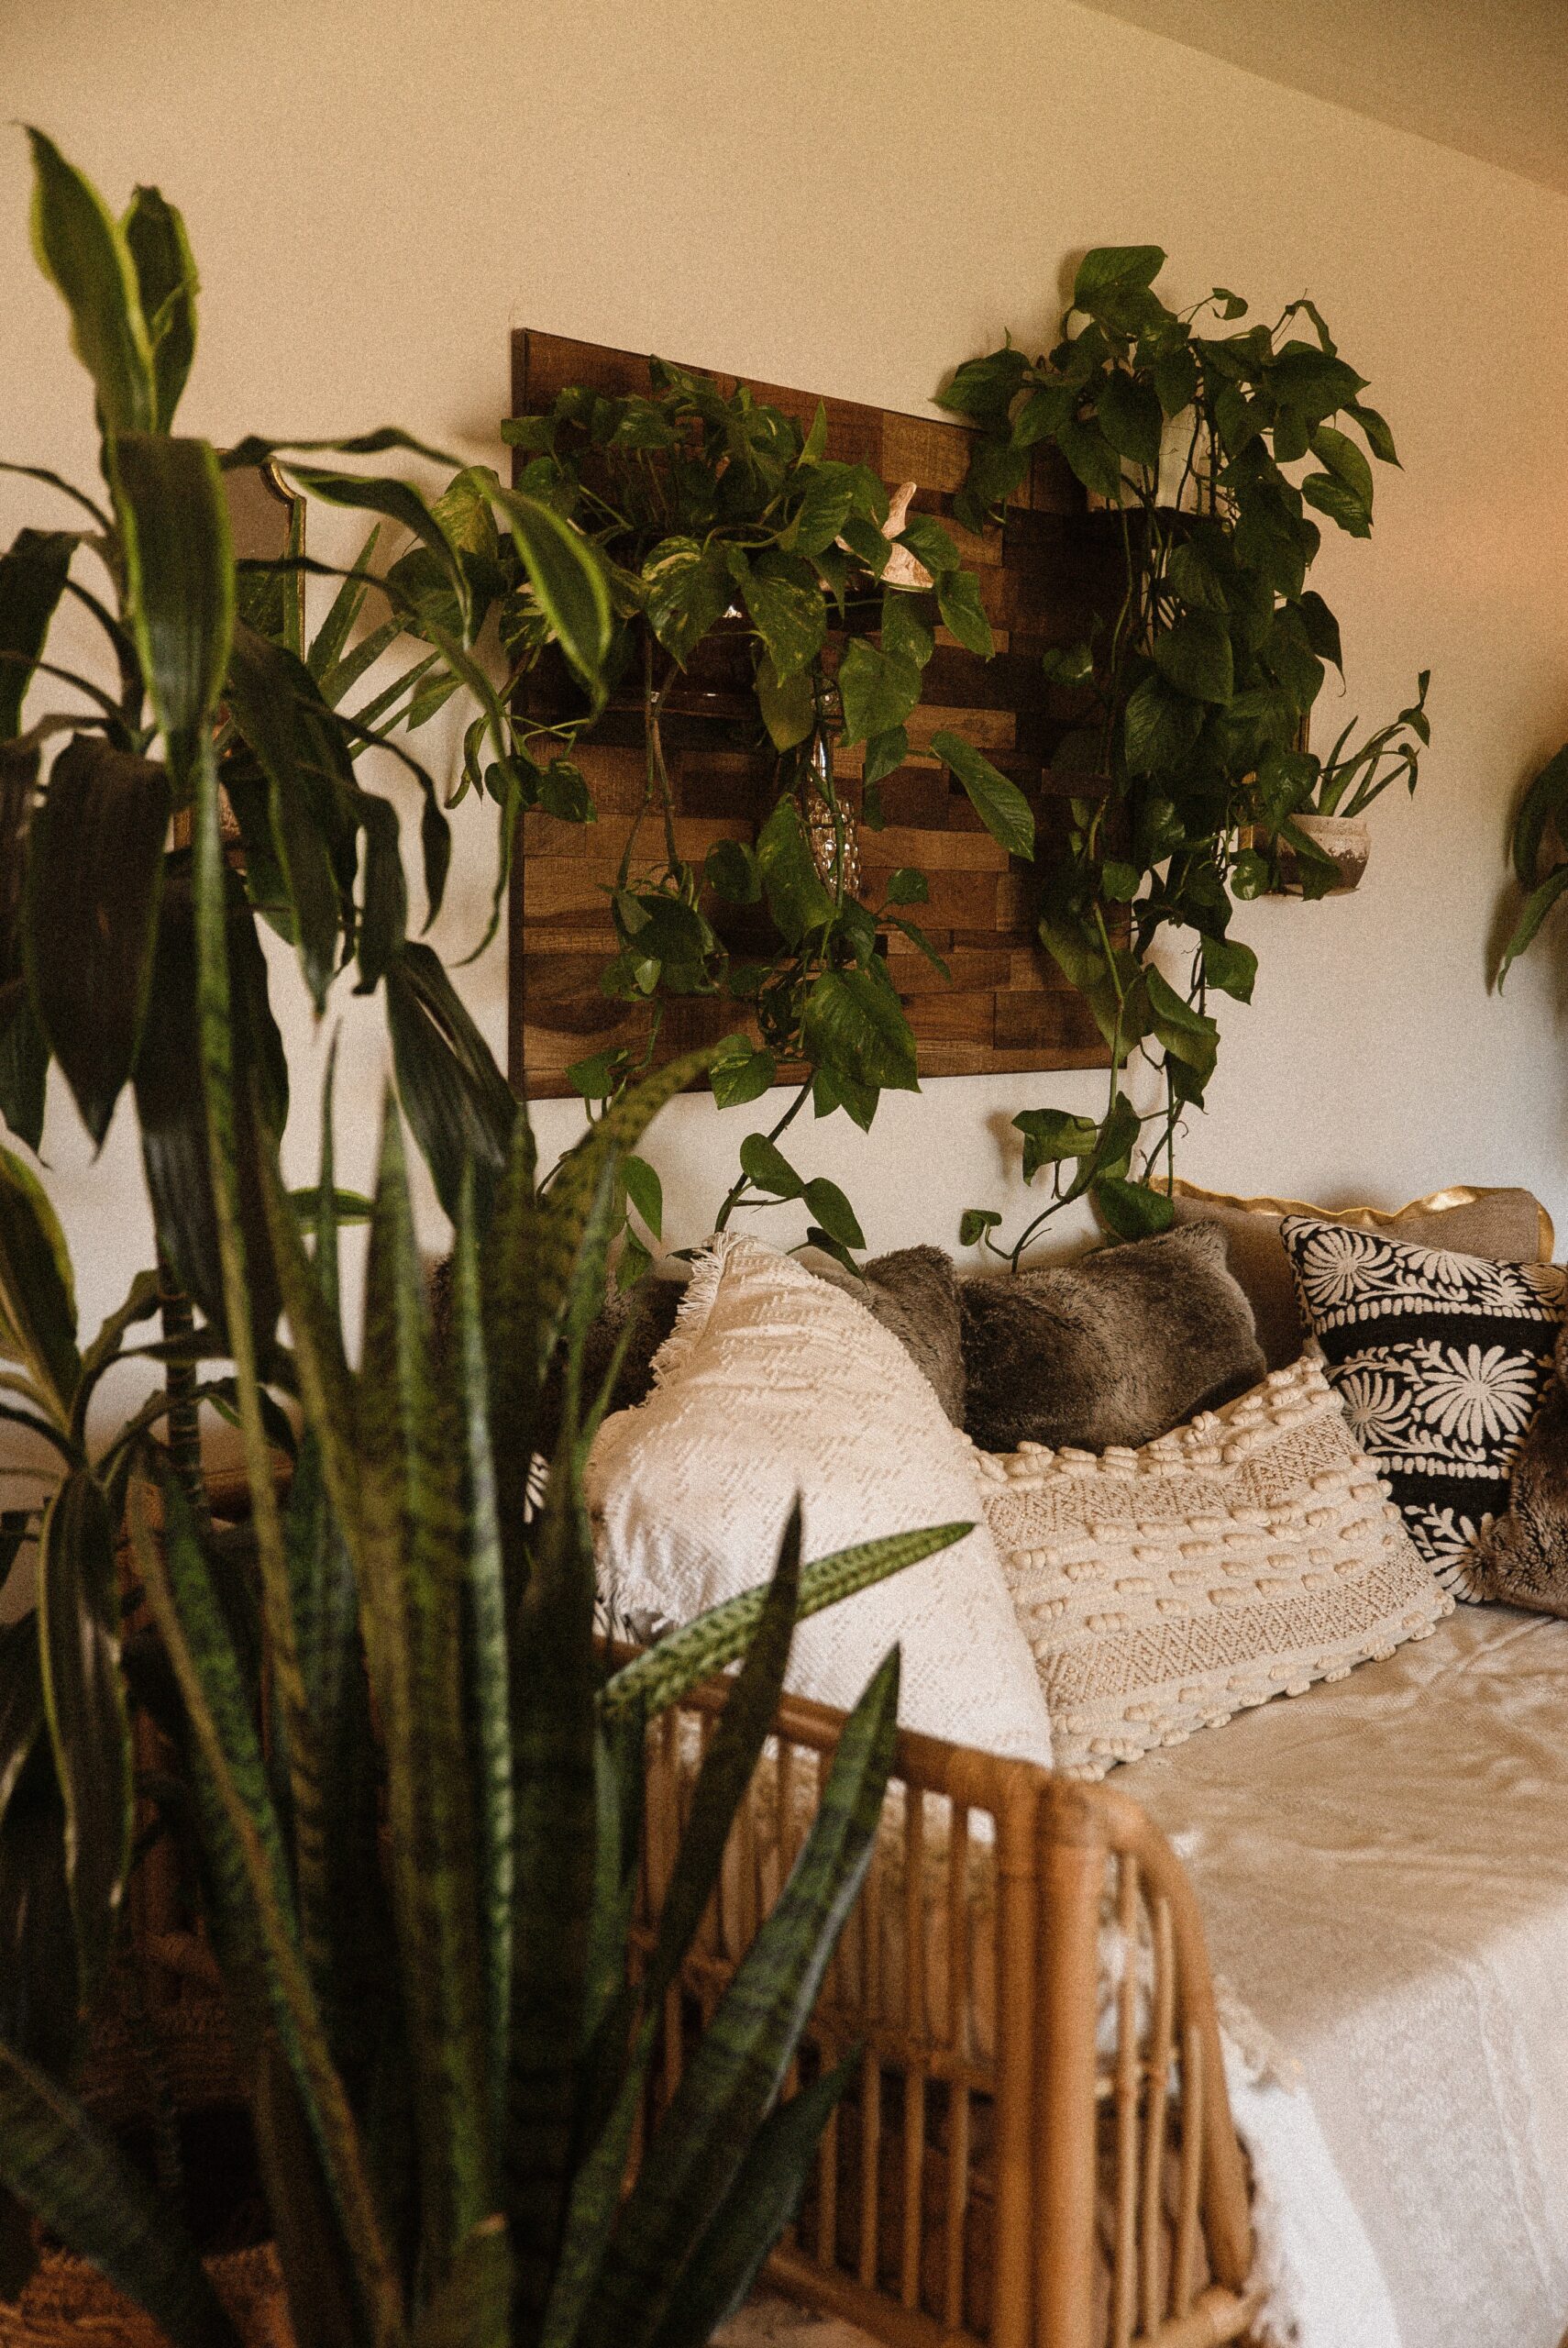 Plants surrounding living room furniture